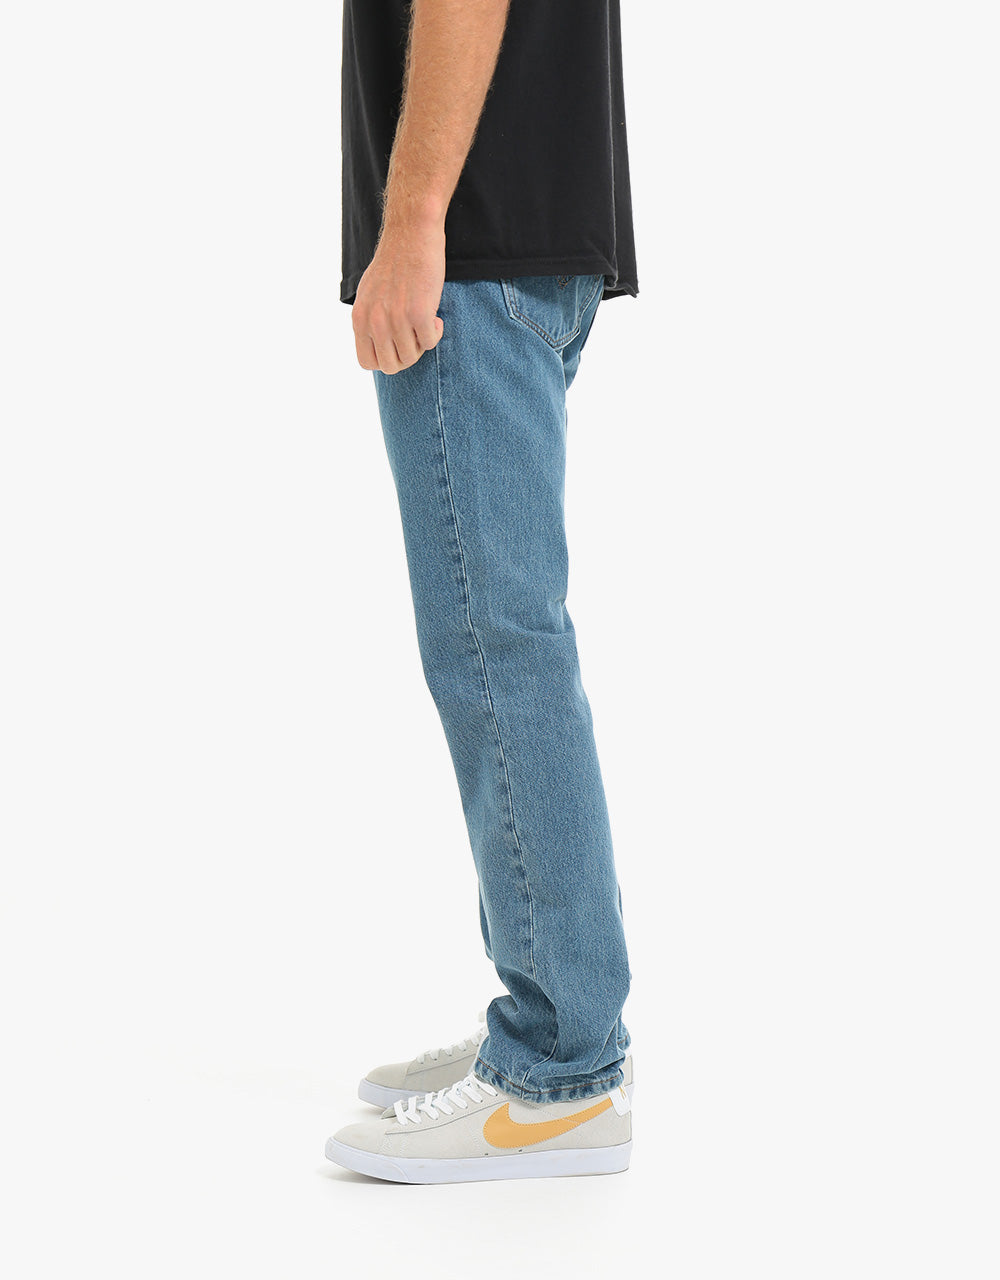 Levi's Skateboarding 511™ Slim Denim Jeans - S&E Shasta